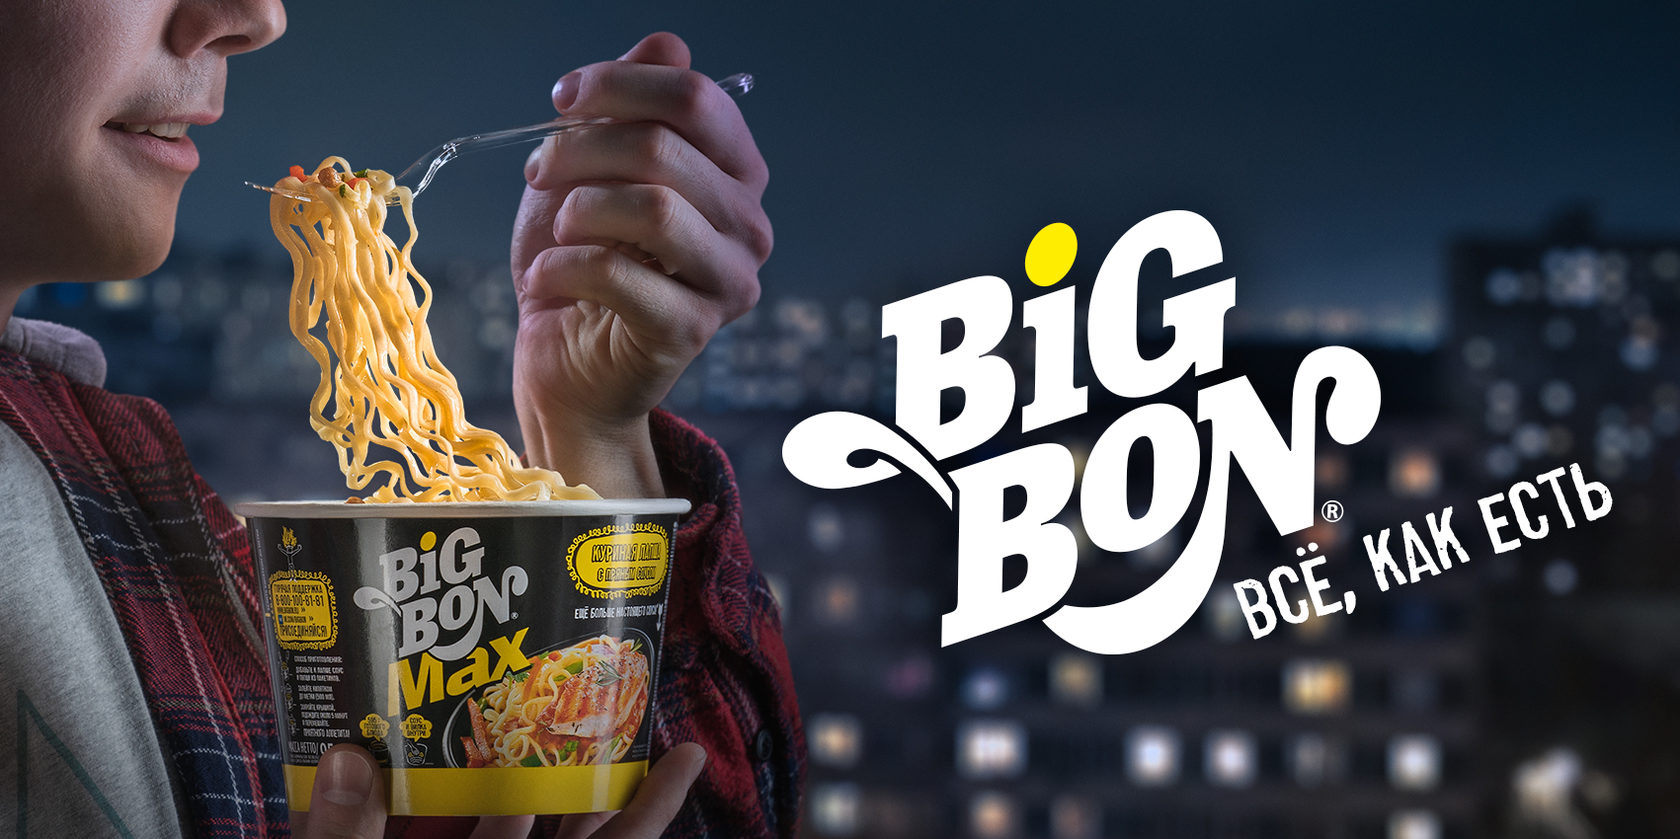 Big whole. Биг Бон. Биг Бон реклама. Лапша быстрого приготовления Биг Бон реклама. BIGBON логотип.